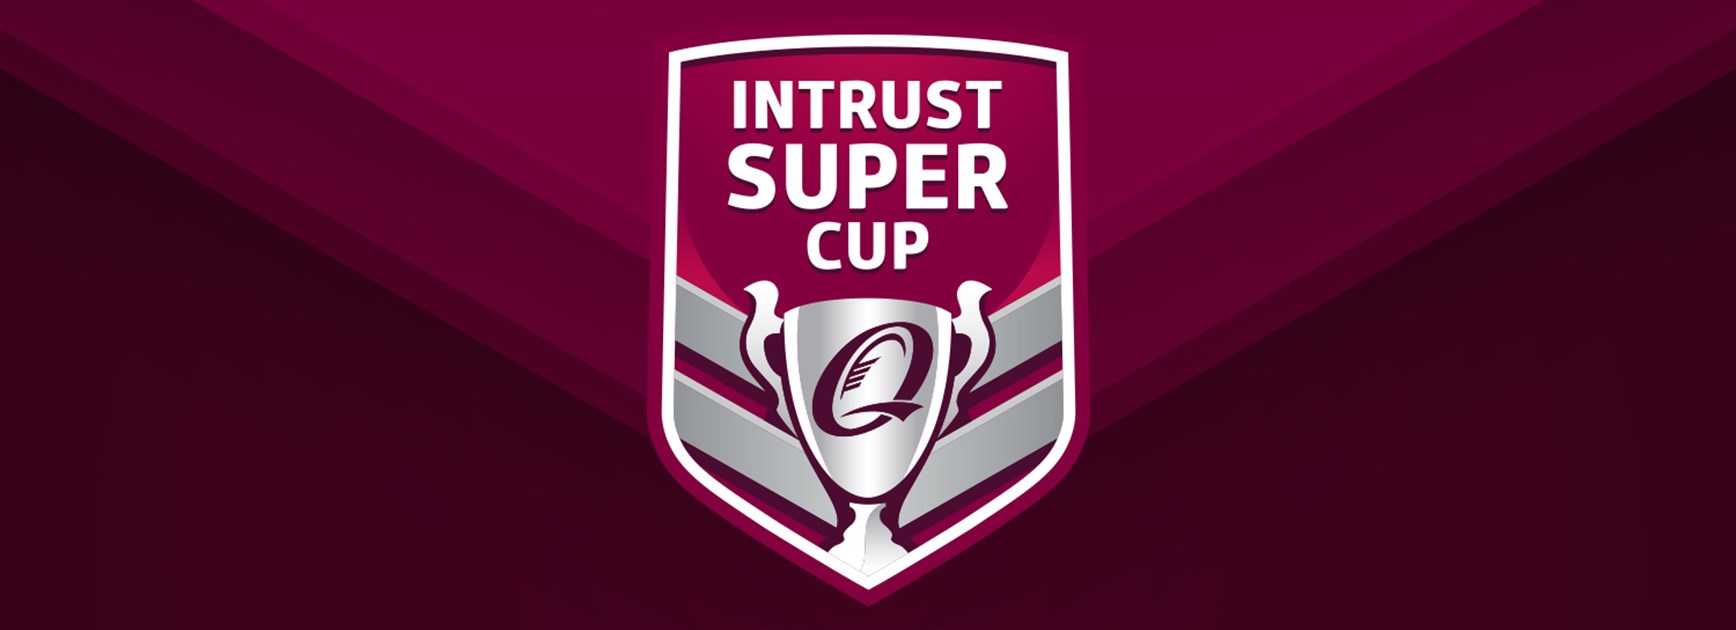 2018 Intrust Super Cup Draw